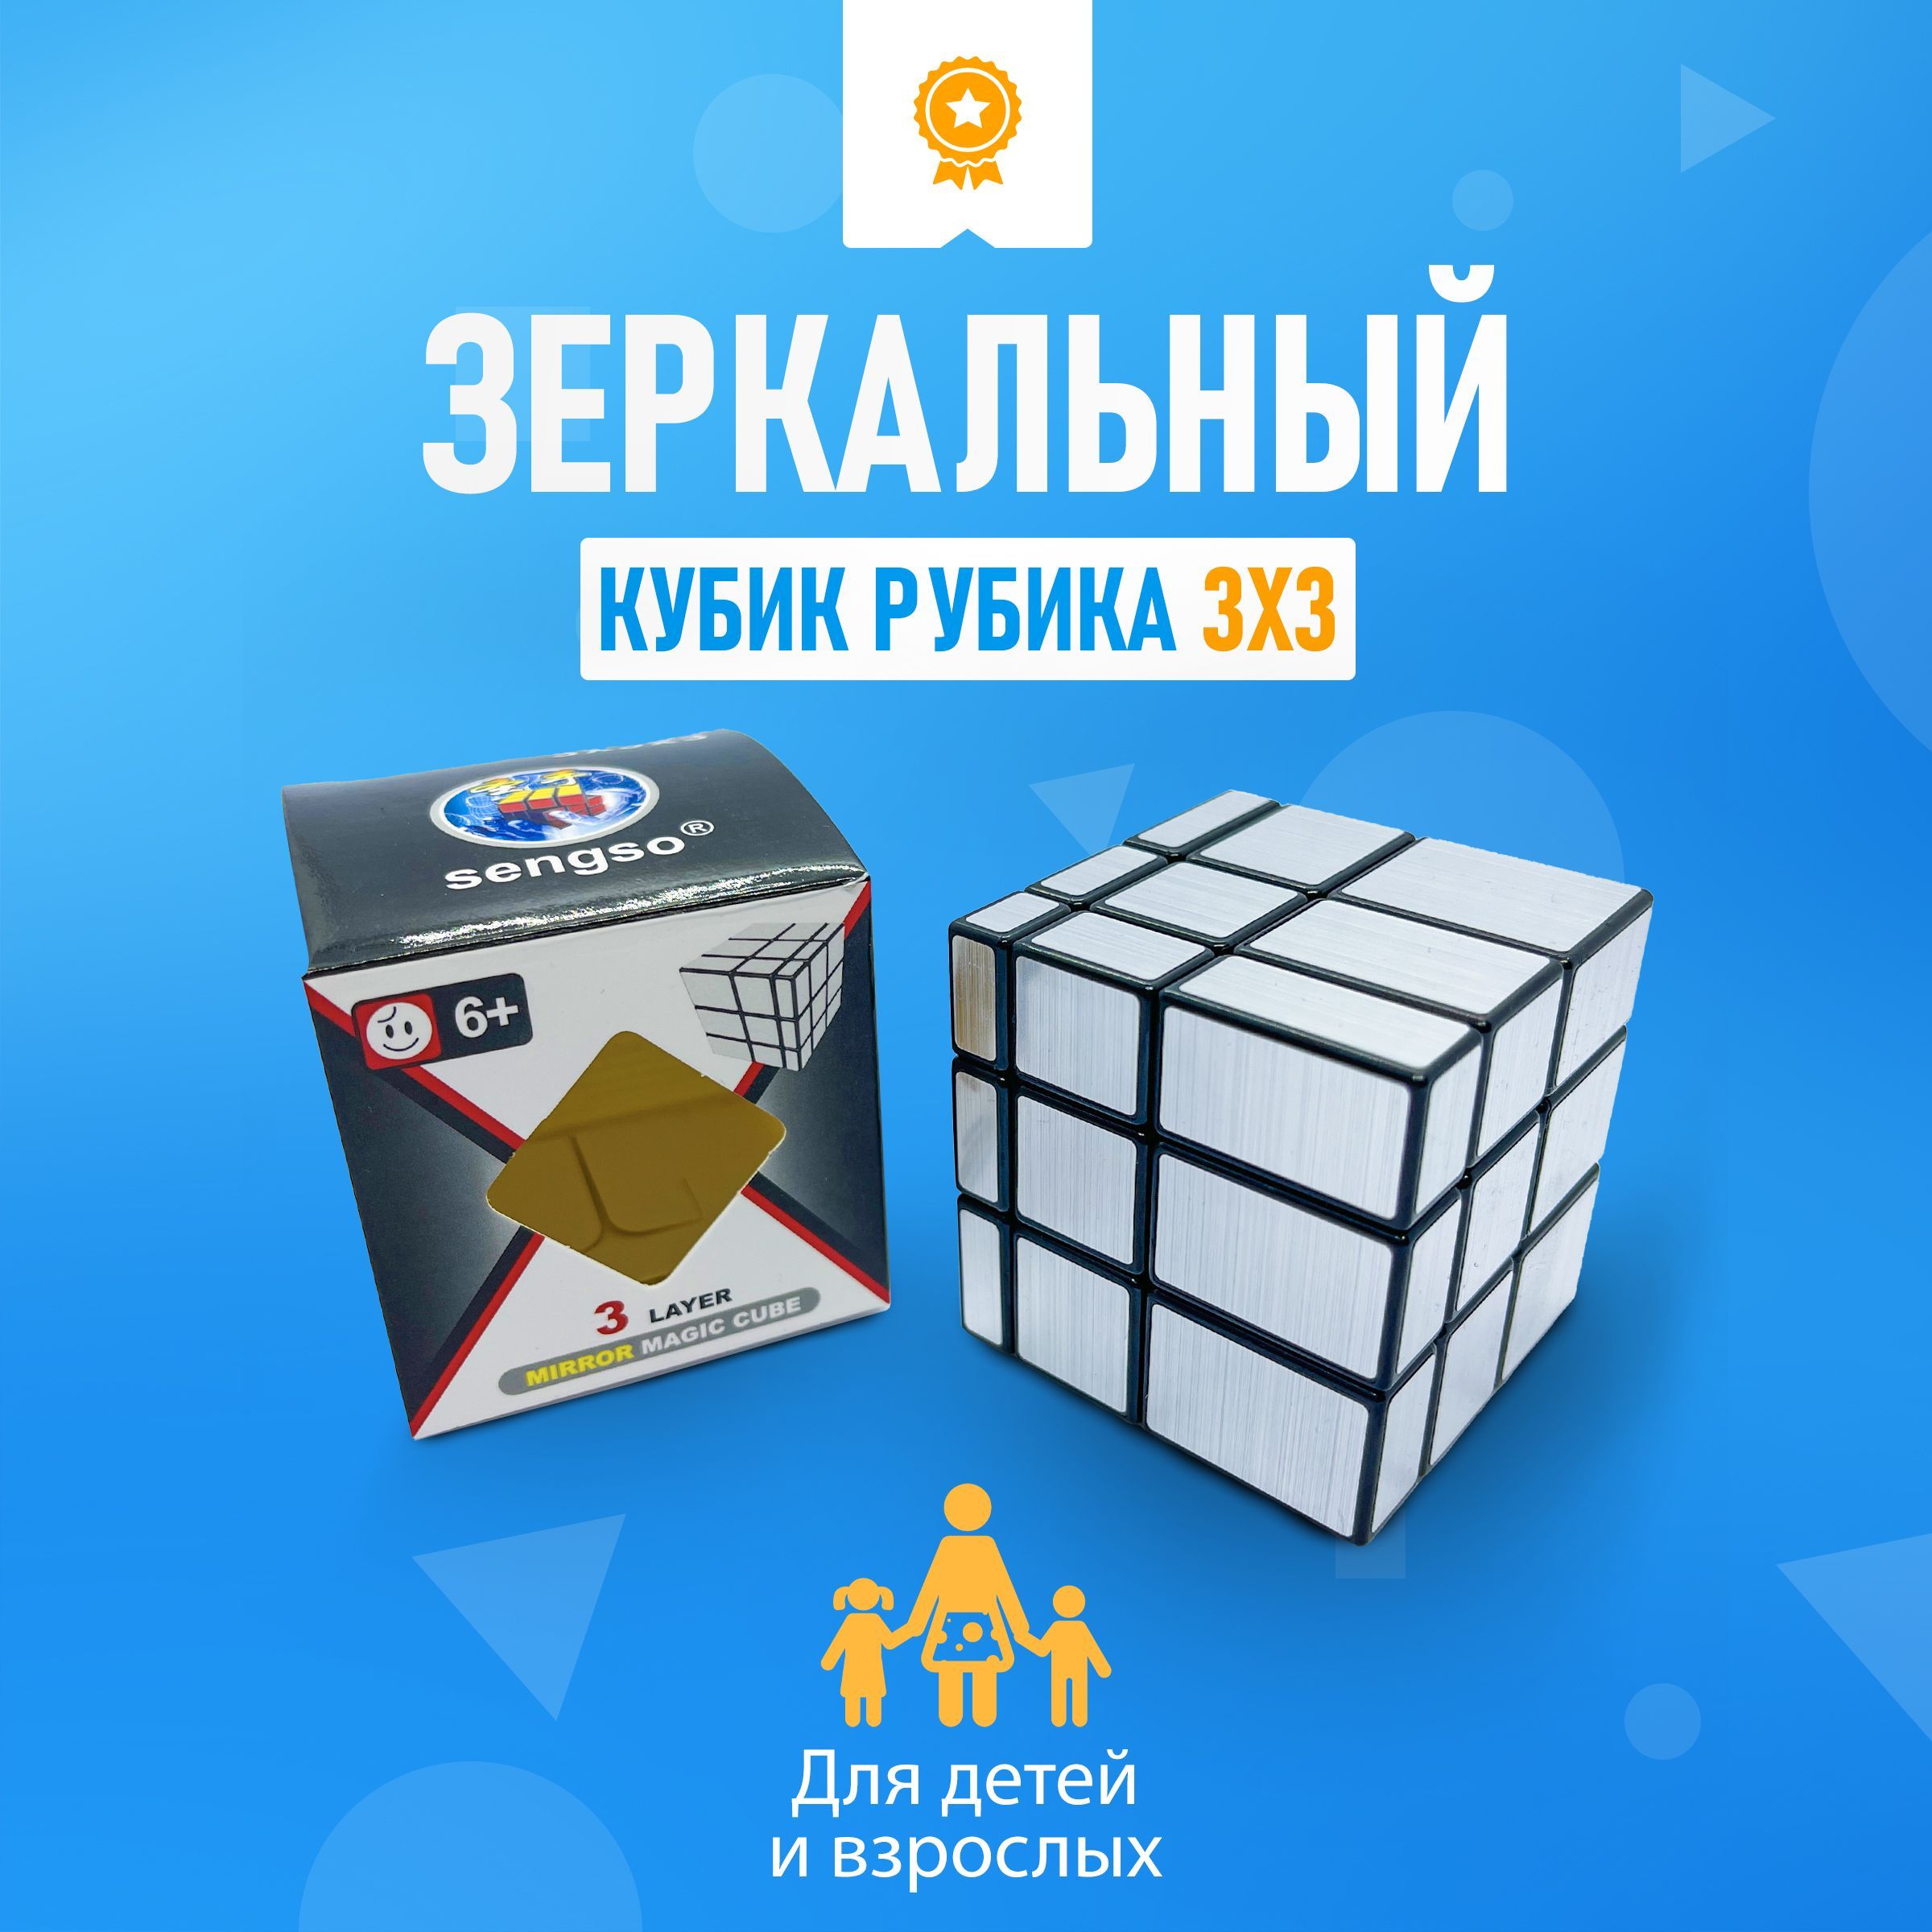 Пошаговая видео-инструкция по сборке кубика Рубика 3х3